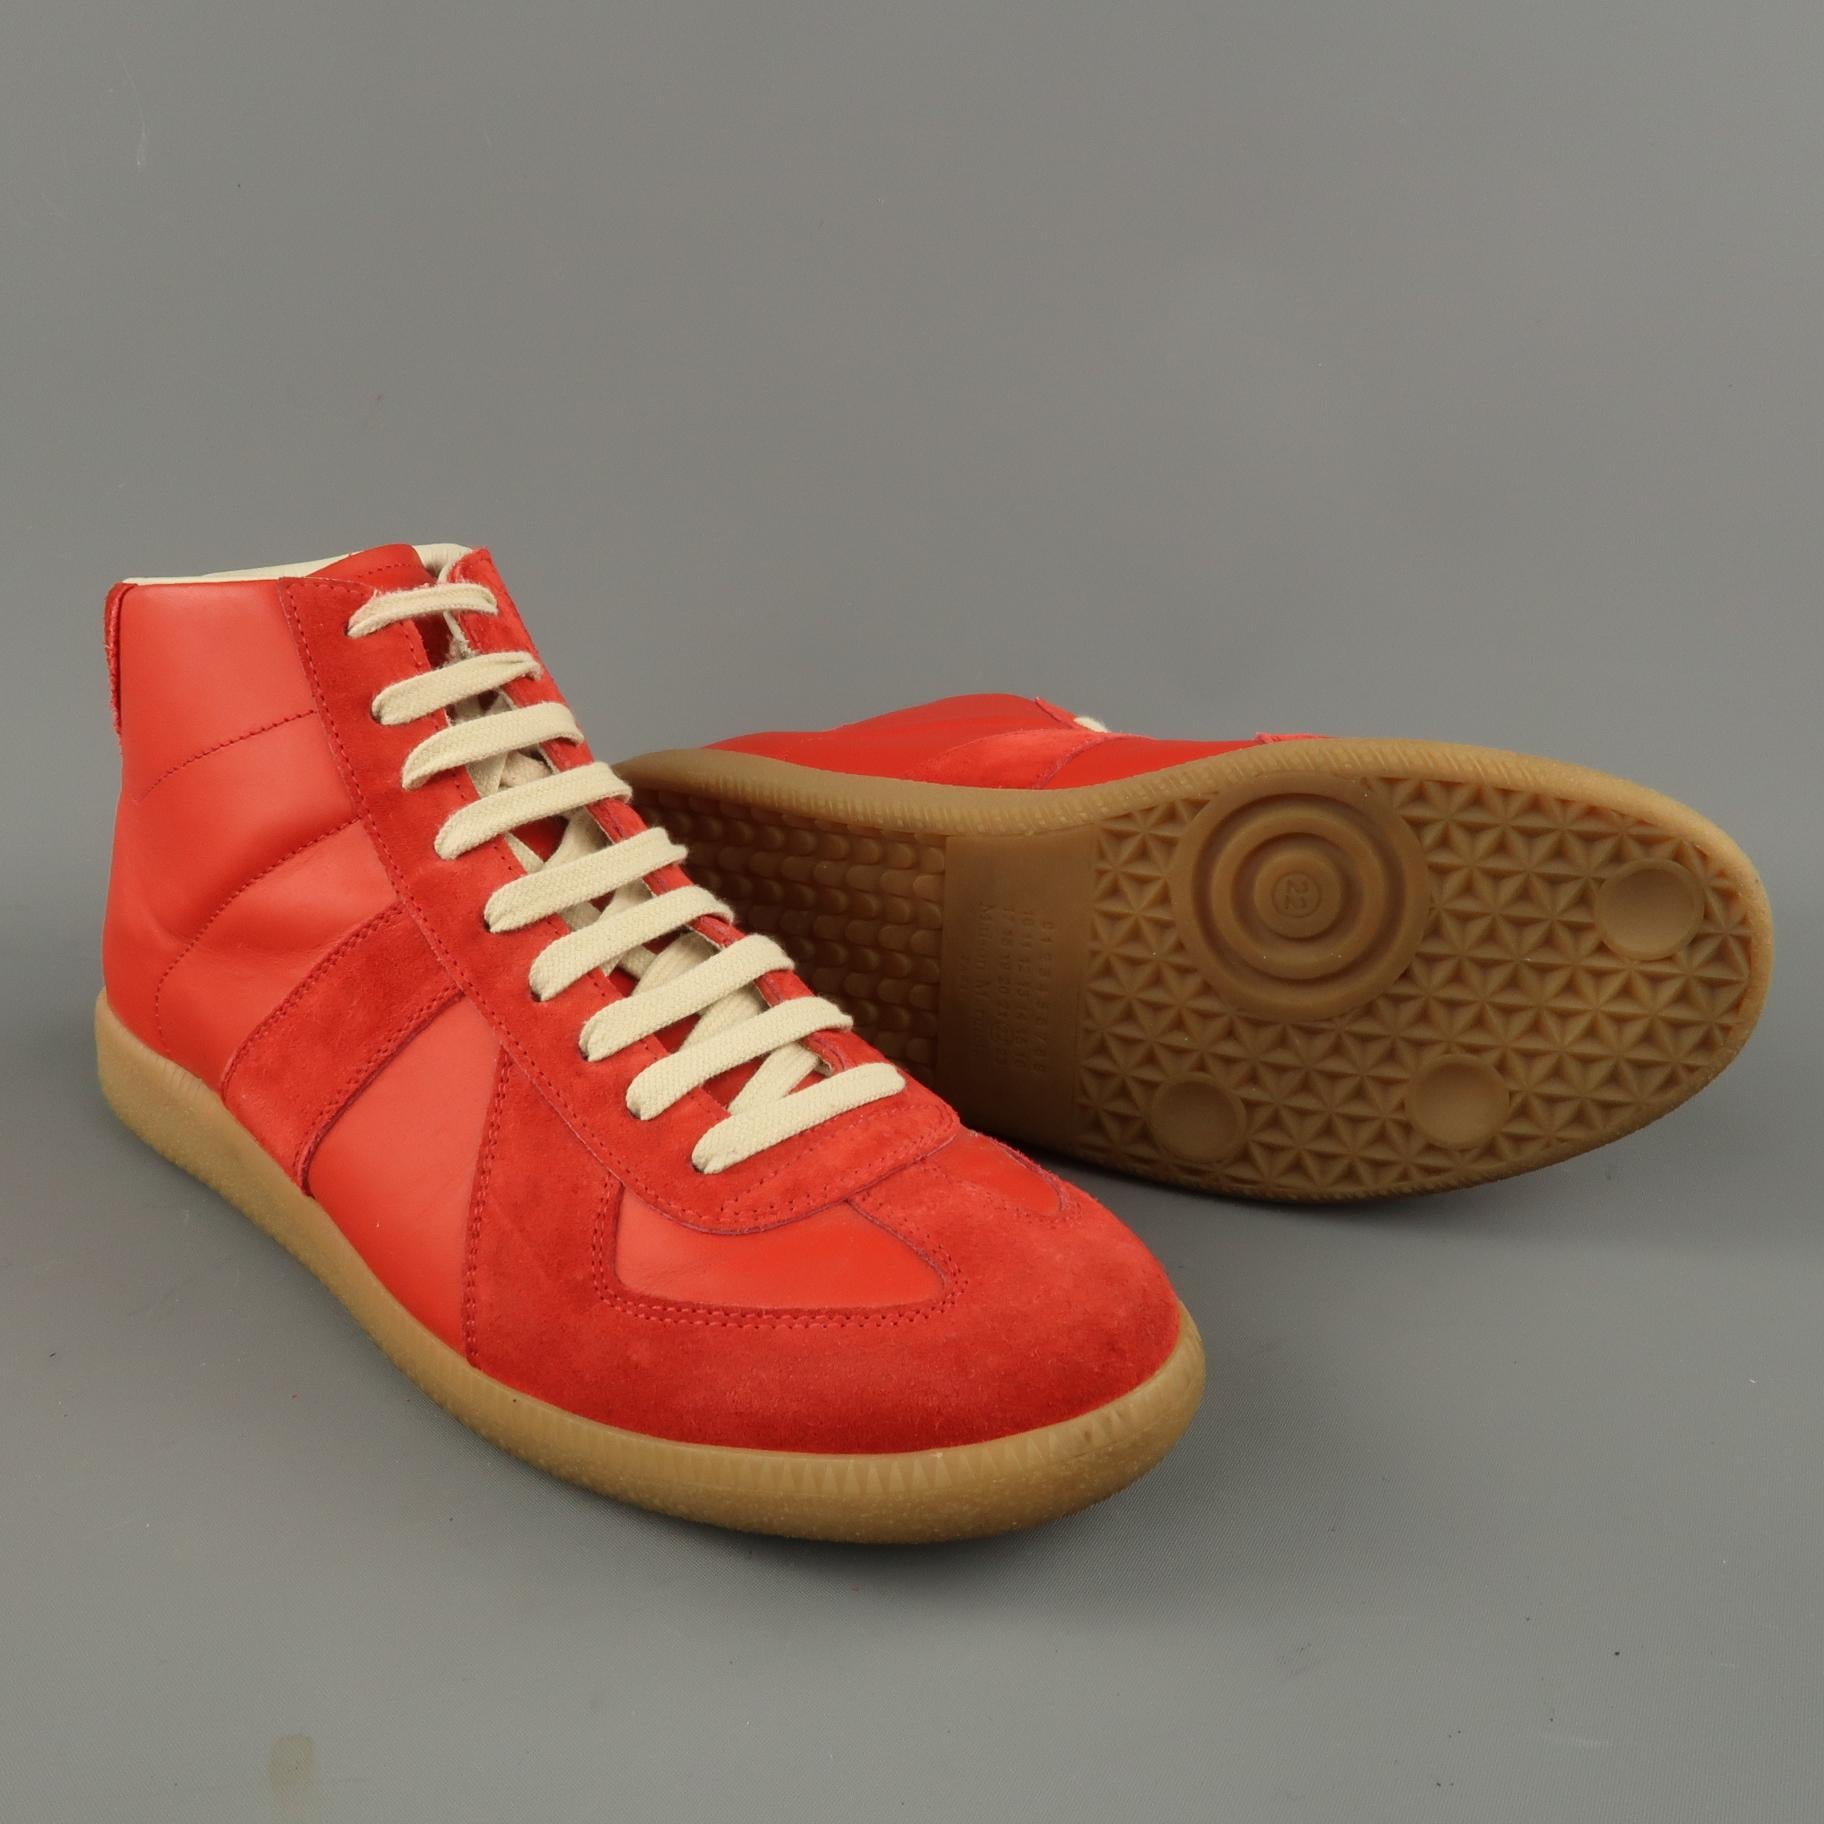 maison margiela shoes red